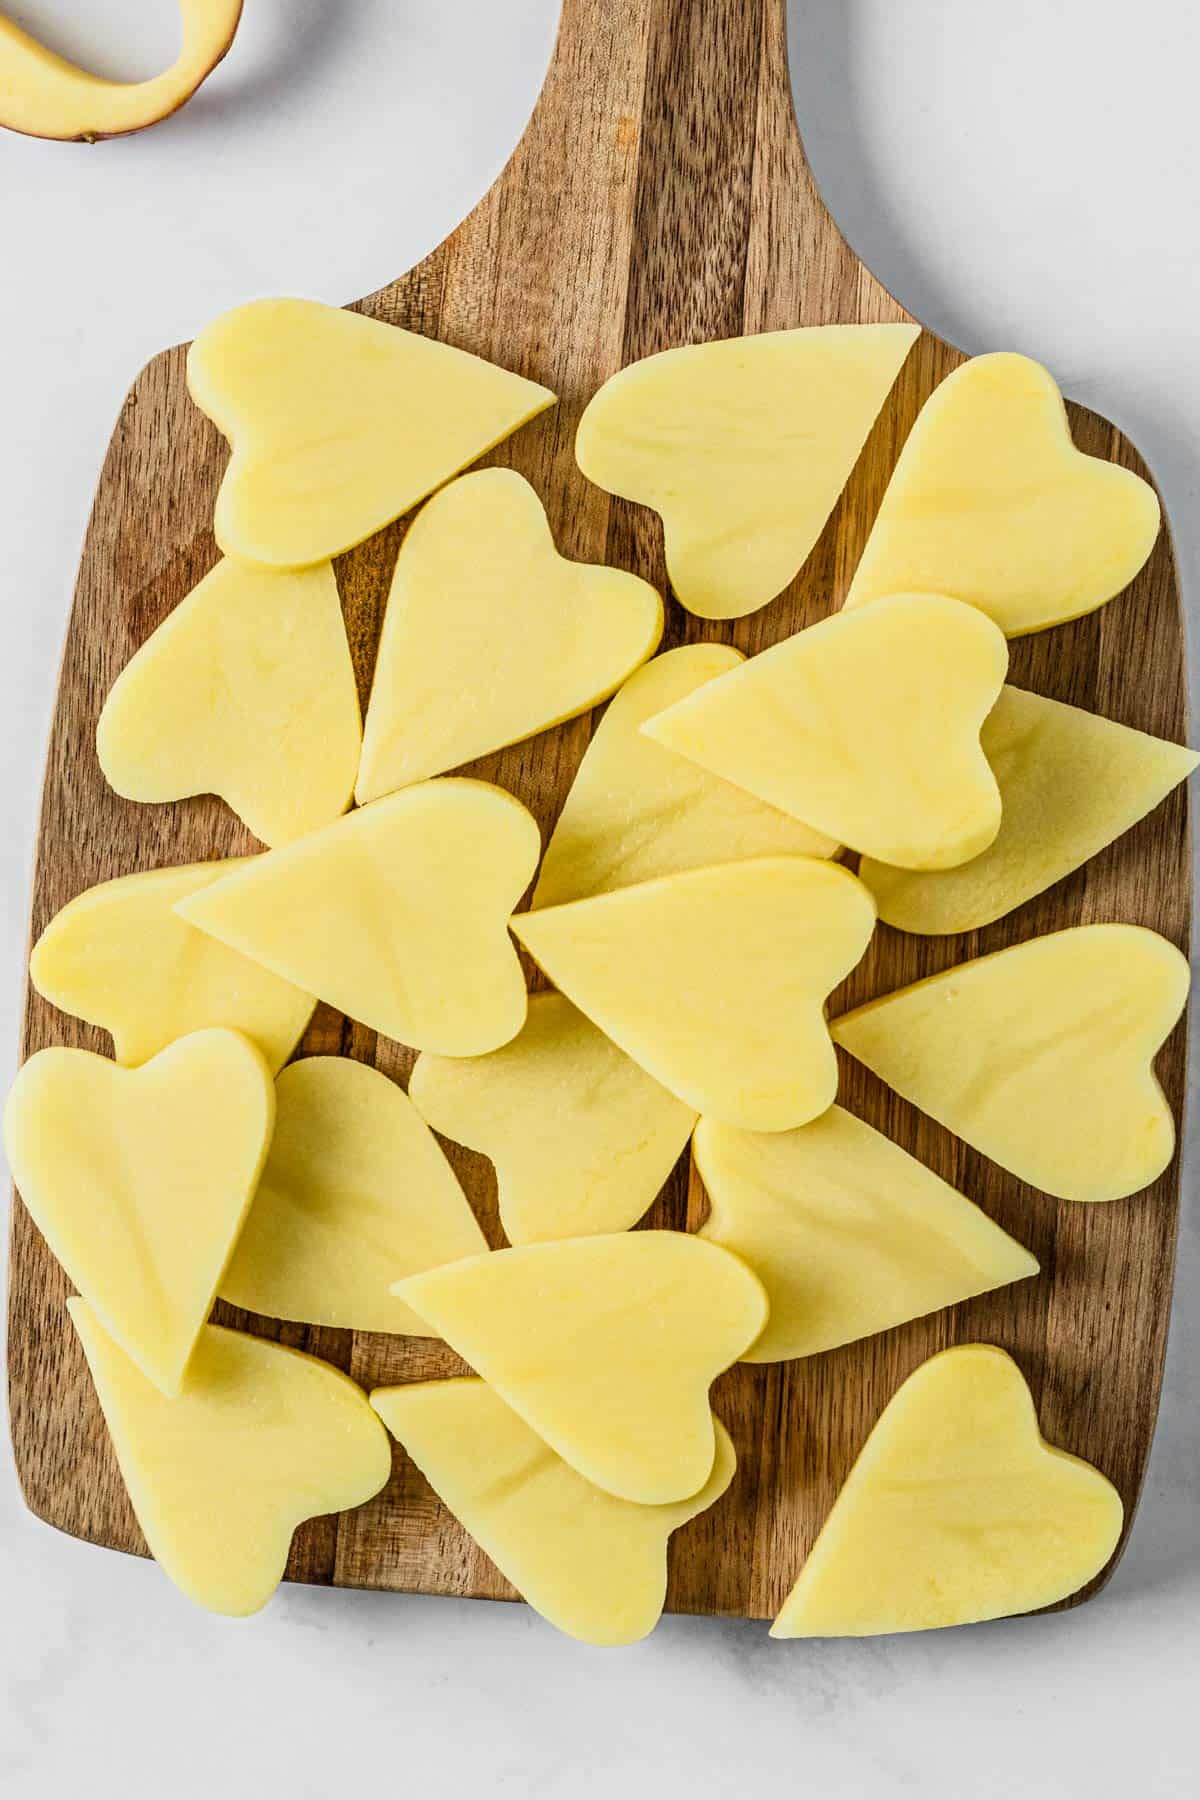 raw heart shaped potatoes on a wooden slicingboard